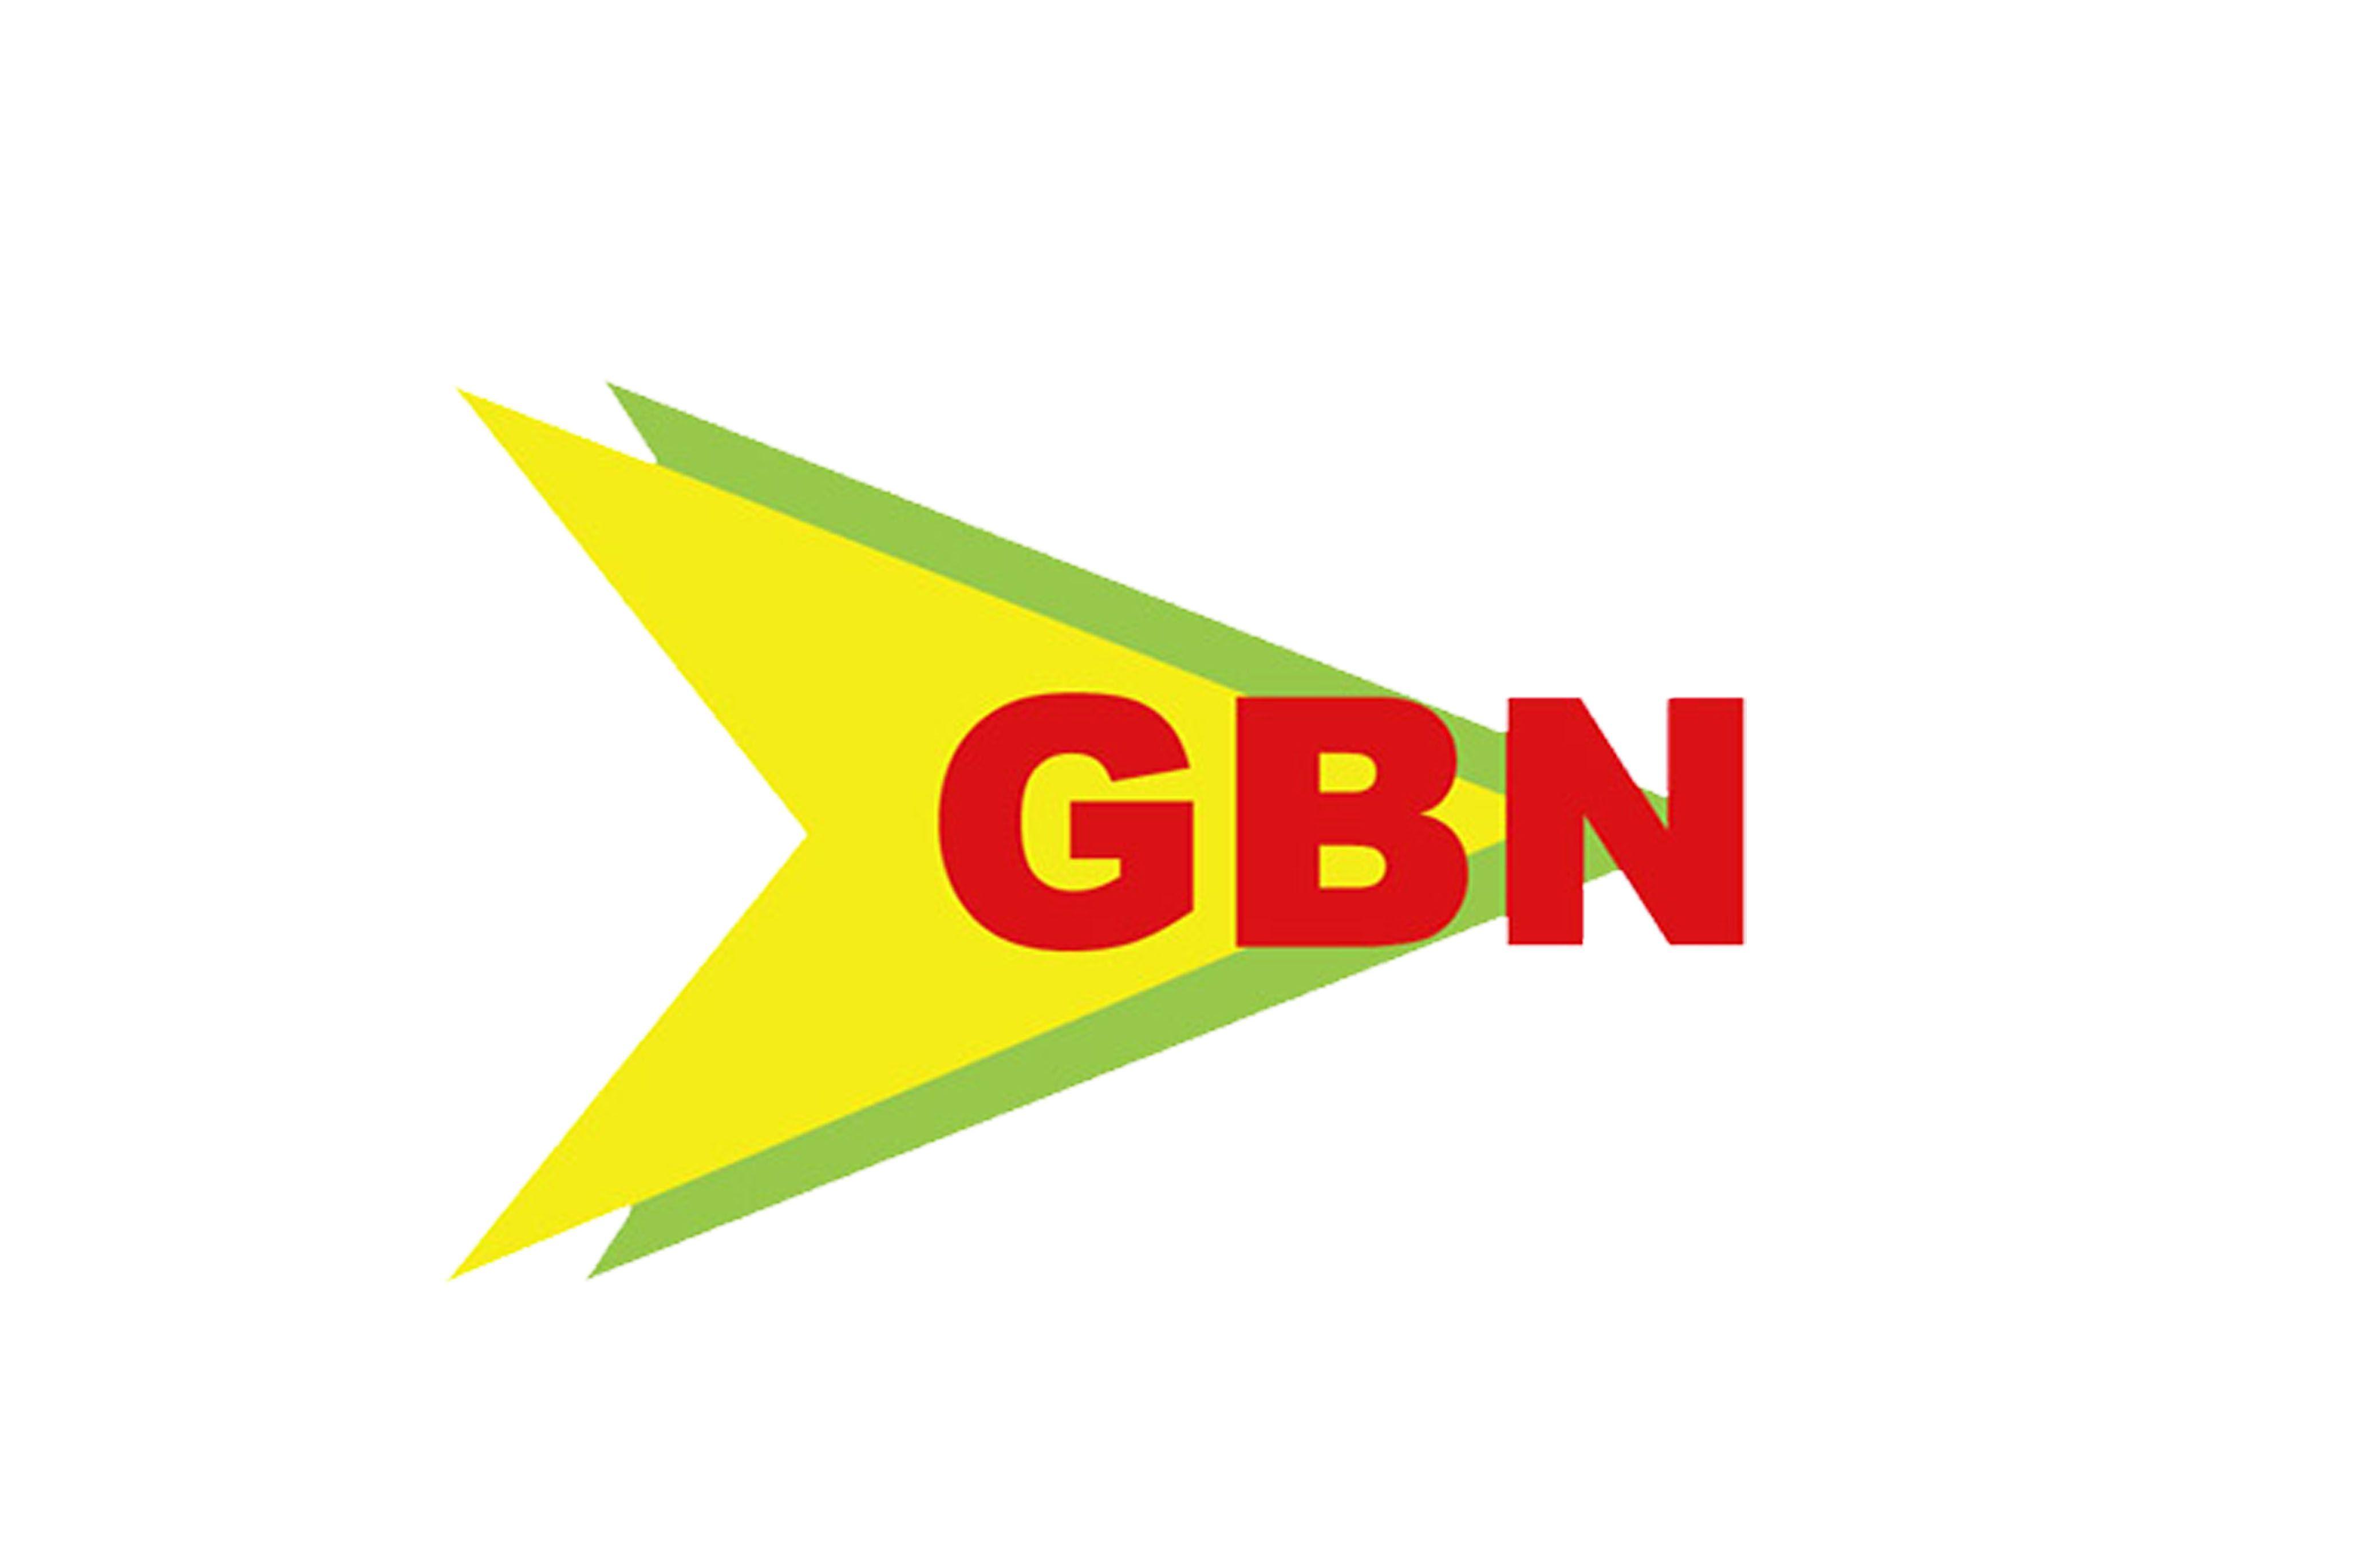 Gbn Logo - GBN LOGO HI RES | Grenada Broadcasting Network